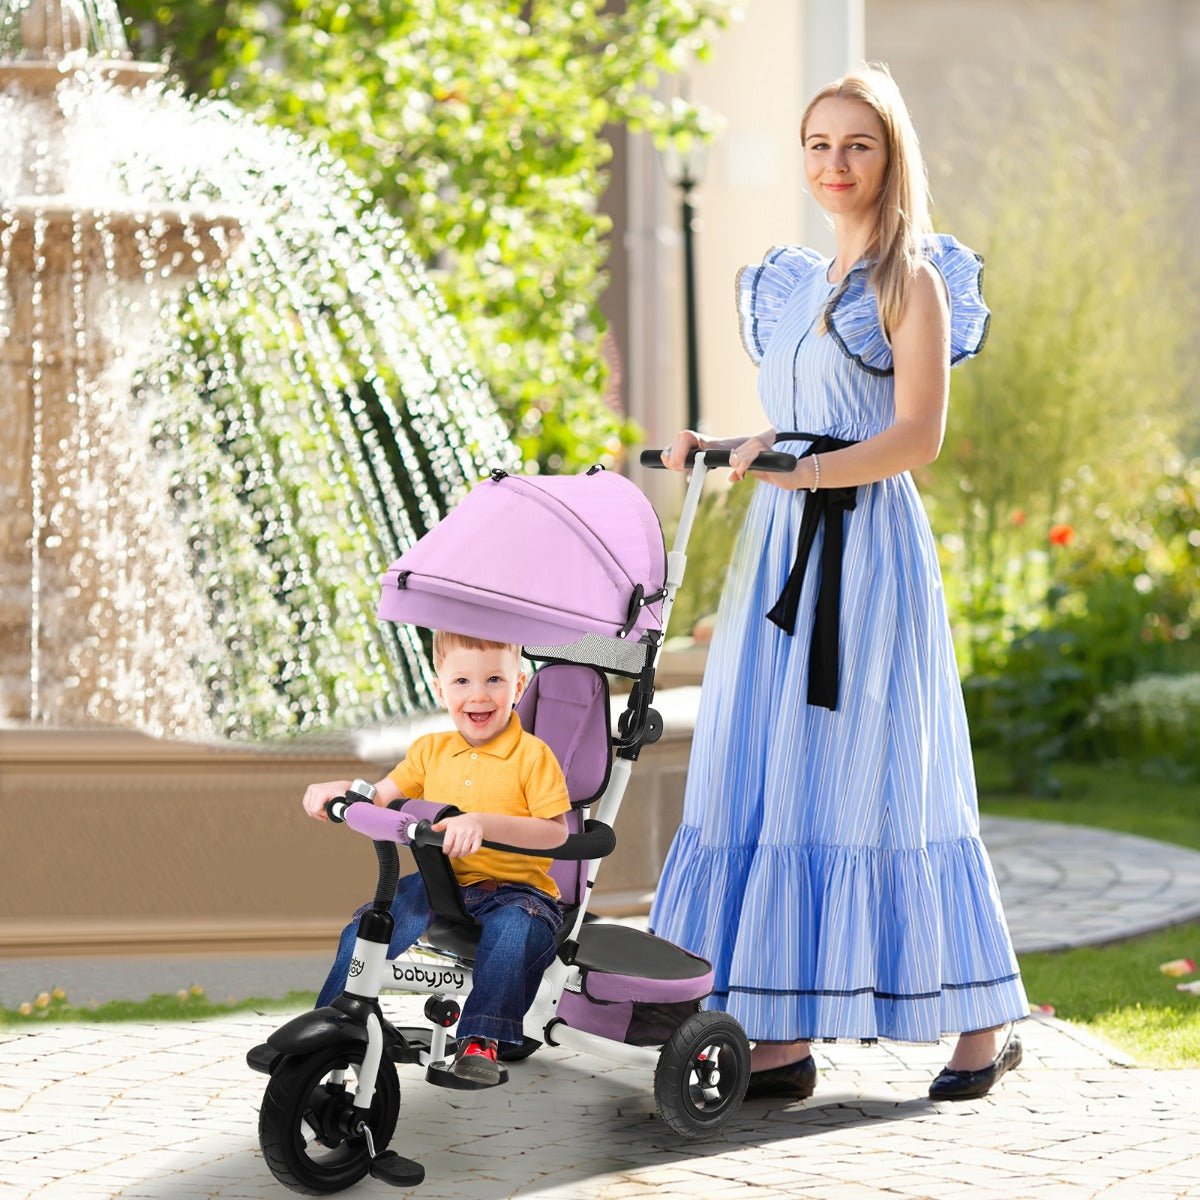 Explore Joyful Rides: Pink Baby Stroller Tricycle at Kids Mega Mart